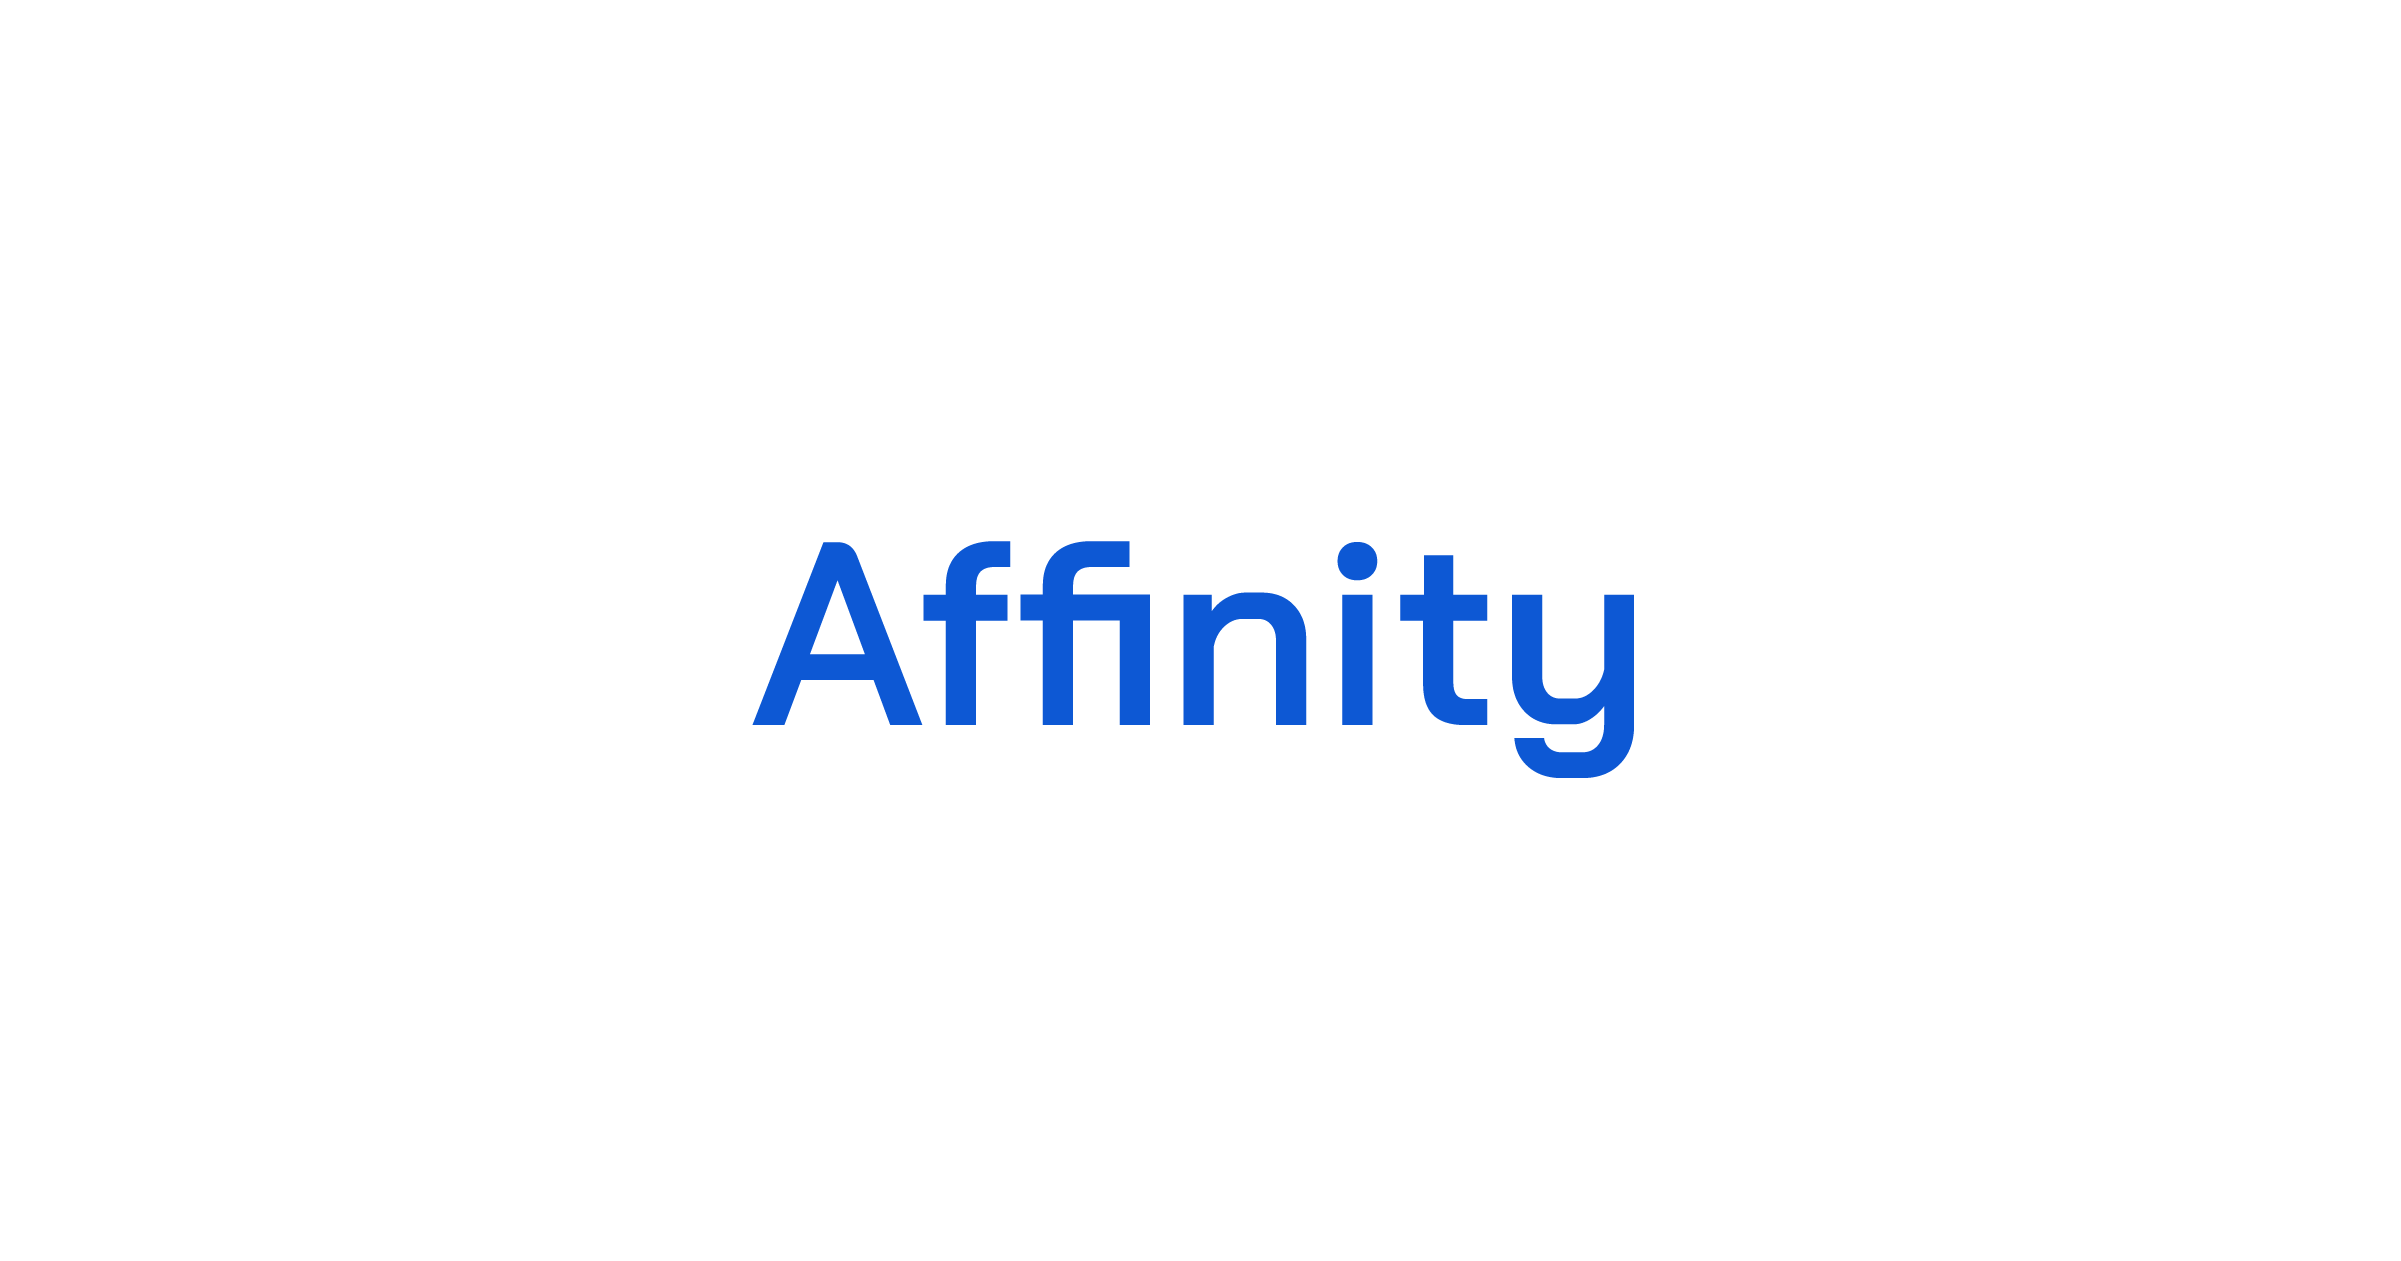 Affinity - Login